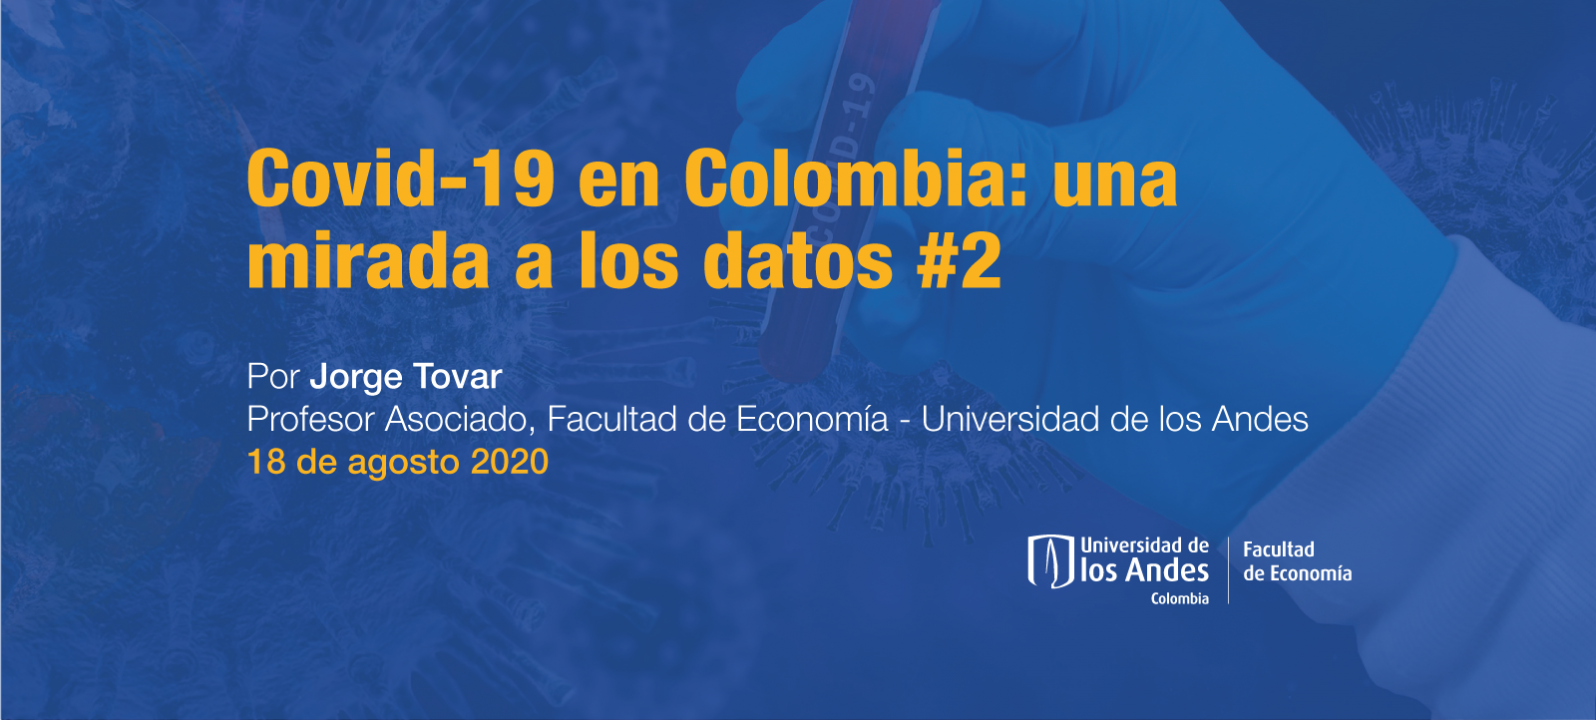 Covid-19-en-Colombia2.png